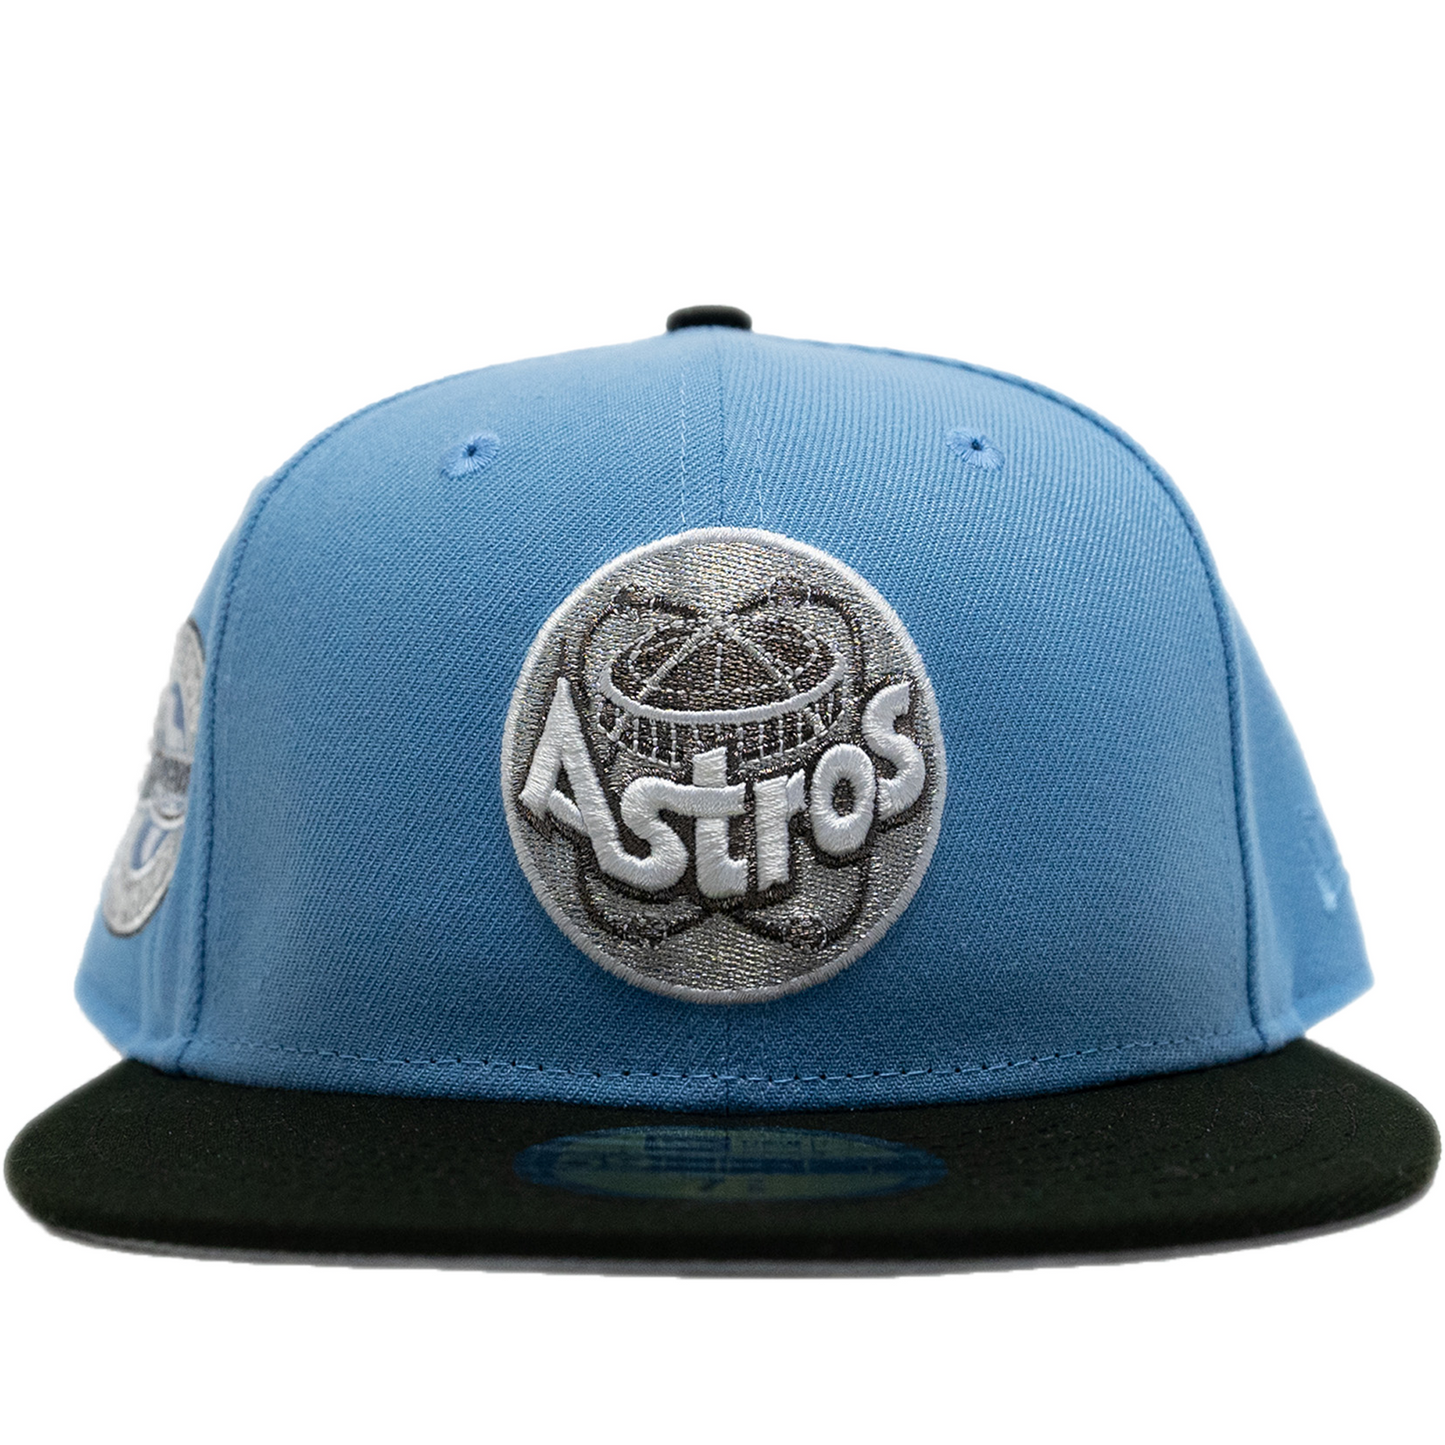 New Era Houston Astros 59FIFTY Hat - Sky/ Black